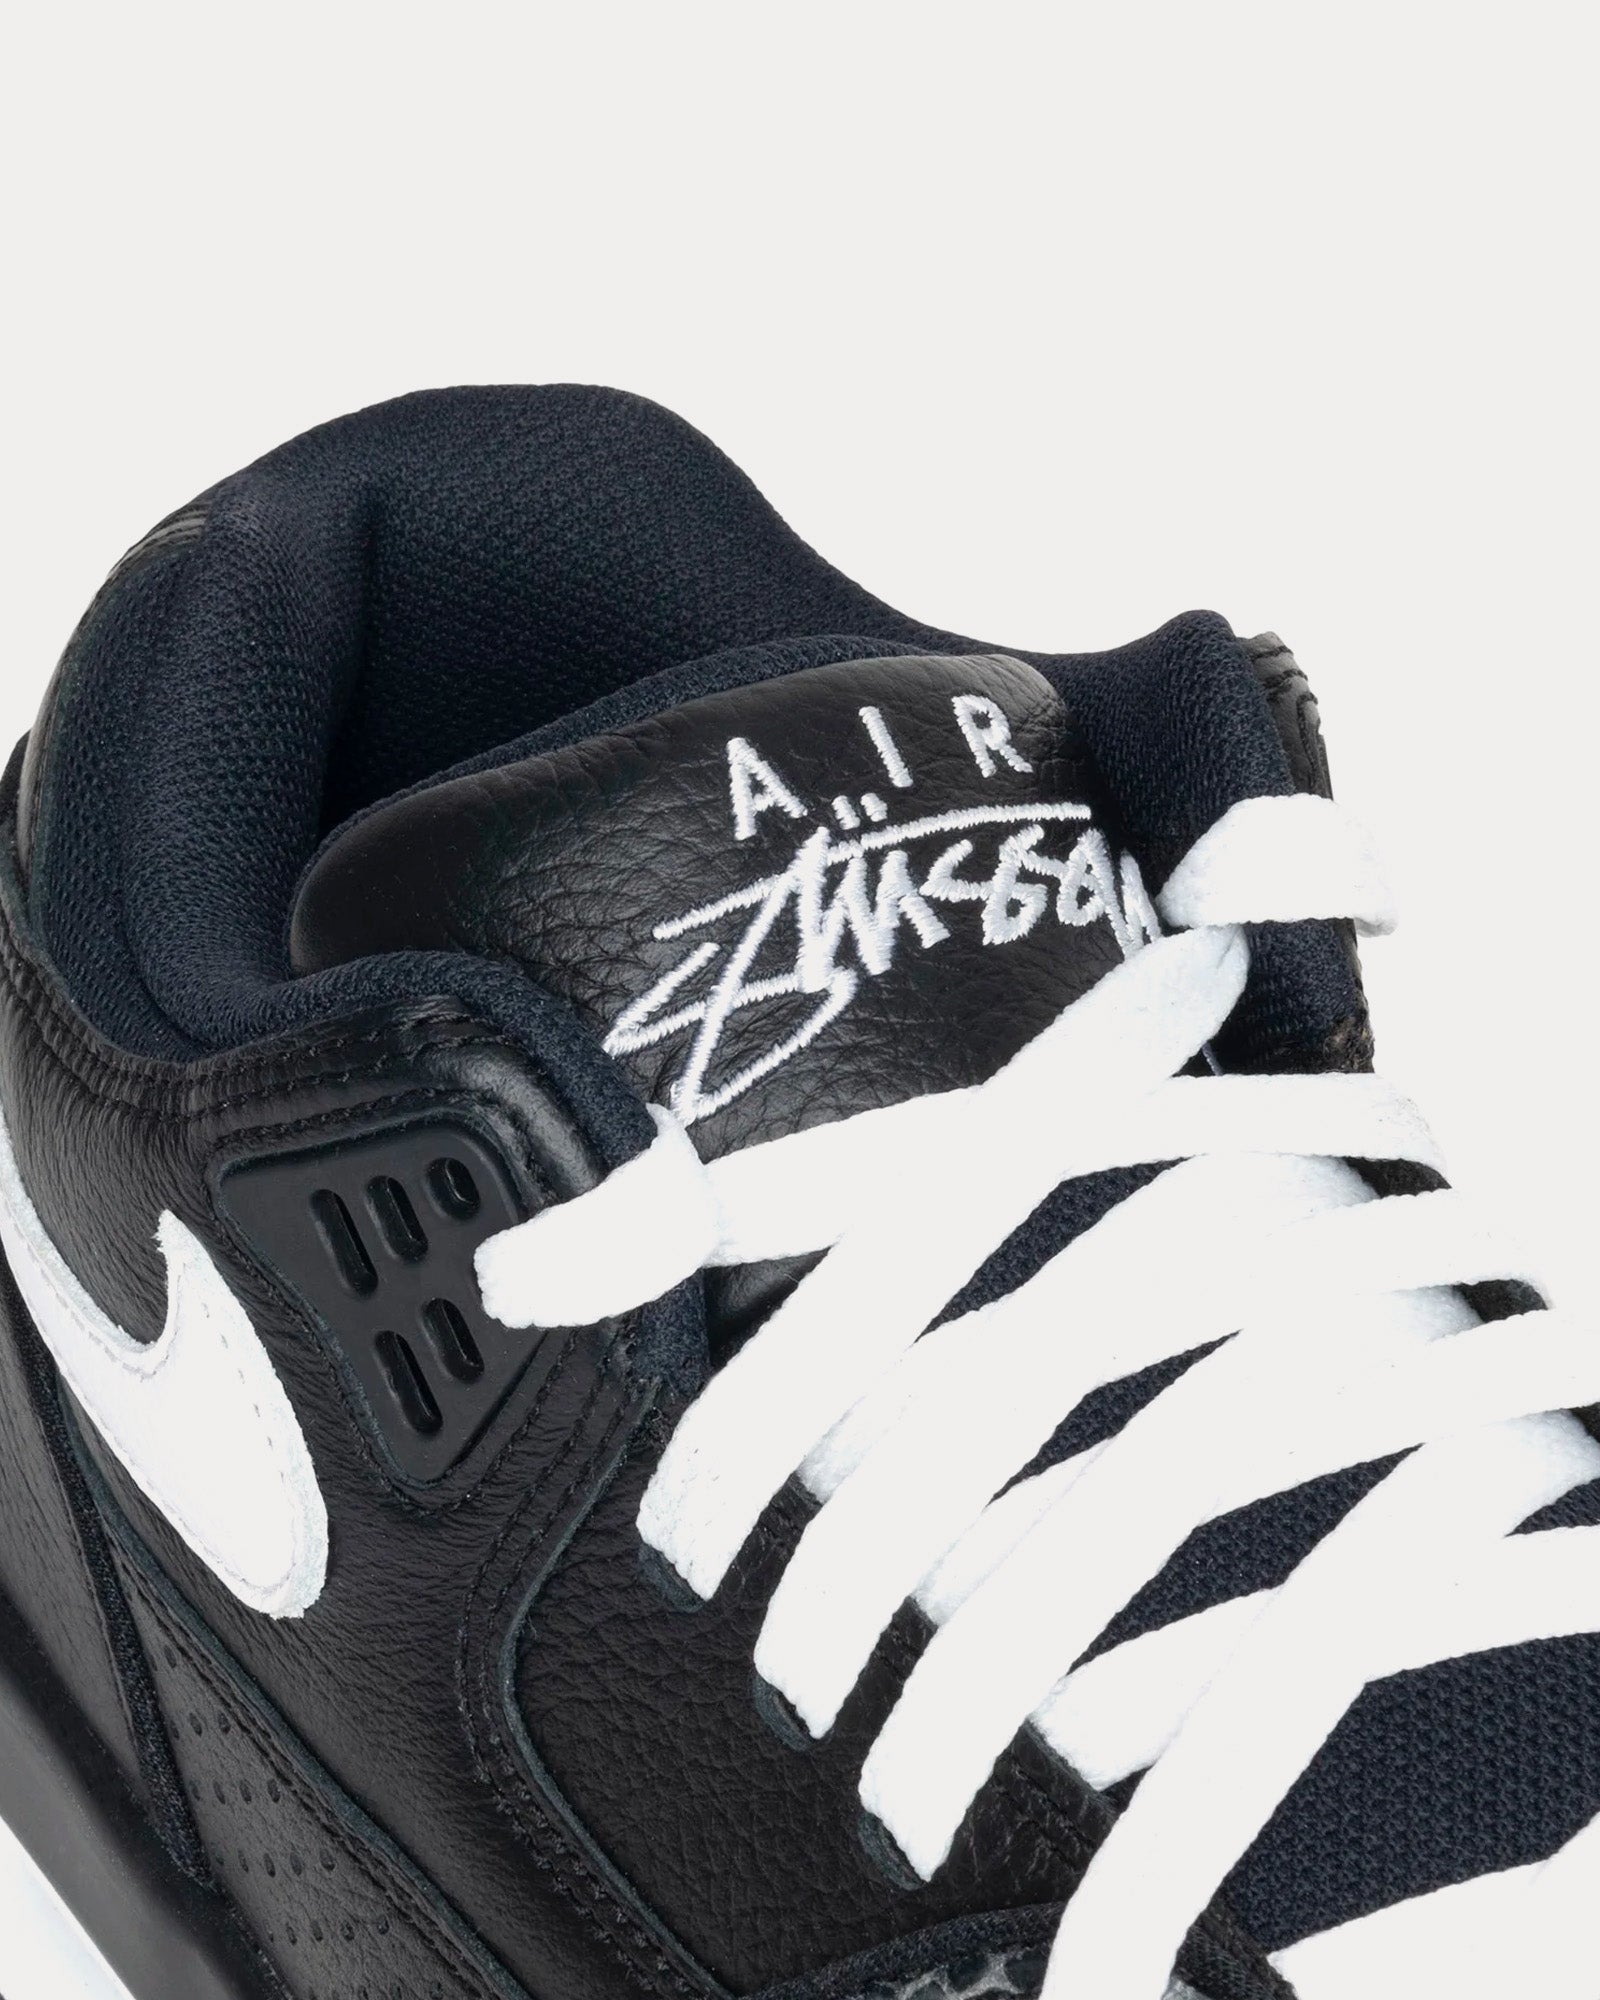 Nike x Stussy - Air Flight '89 Low Black / White / White Low Top Sneakers